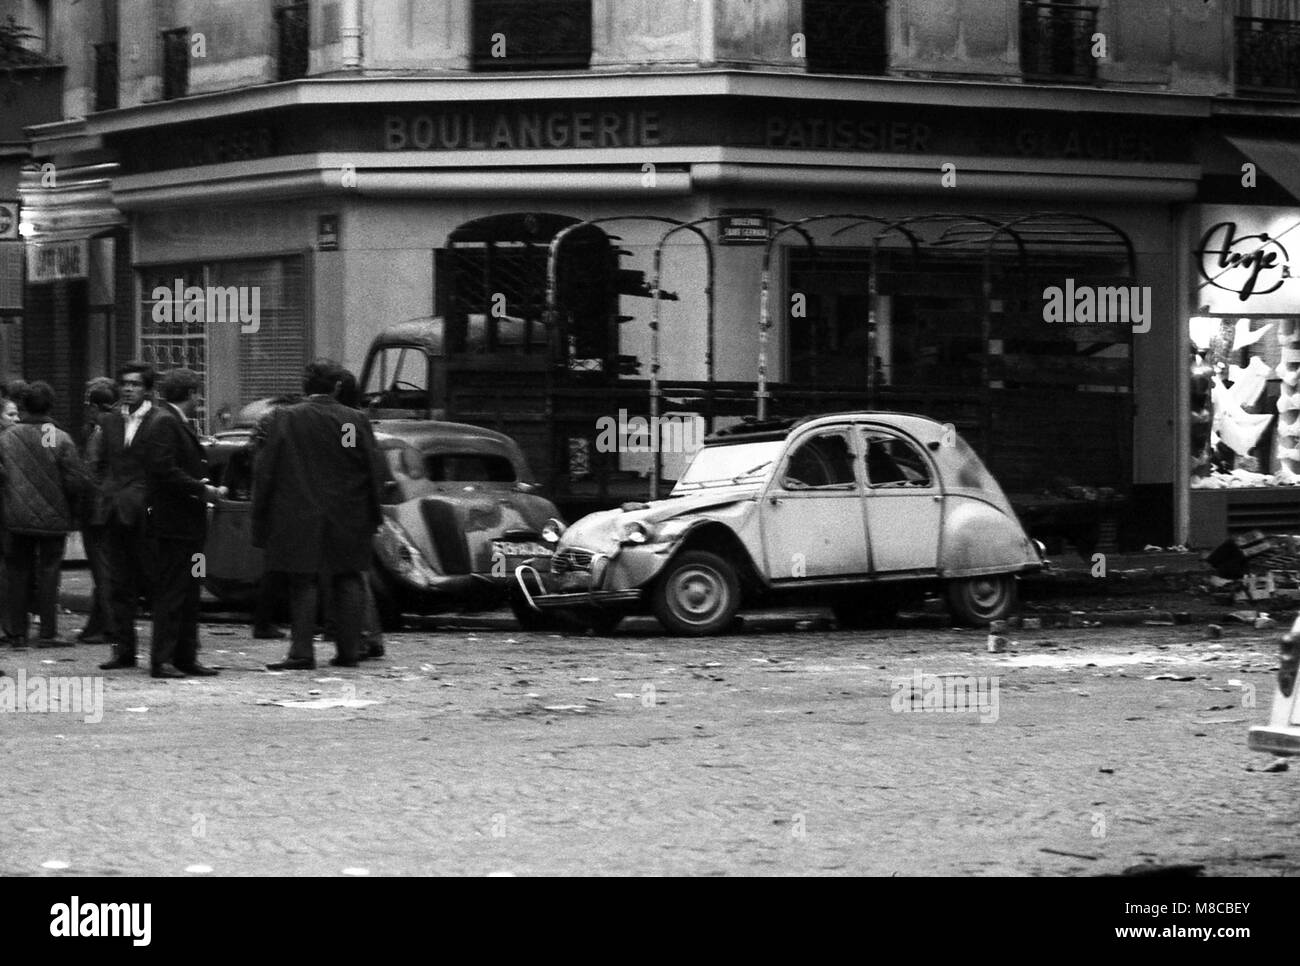 Philippe Gras / Le Pictorium -  May 1968 -  1968  -  France / Ile-de-France (region) / Paris  -  Vehicles destroyed after the demonstrations Stock Photo